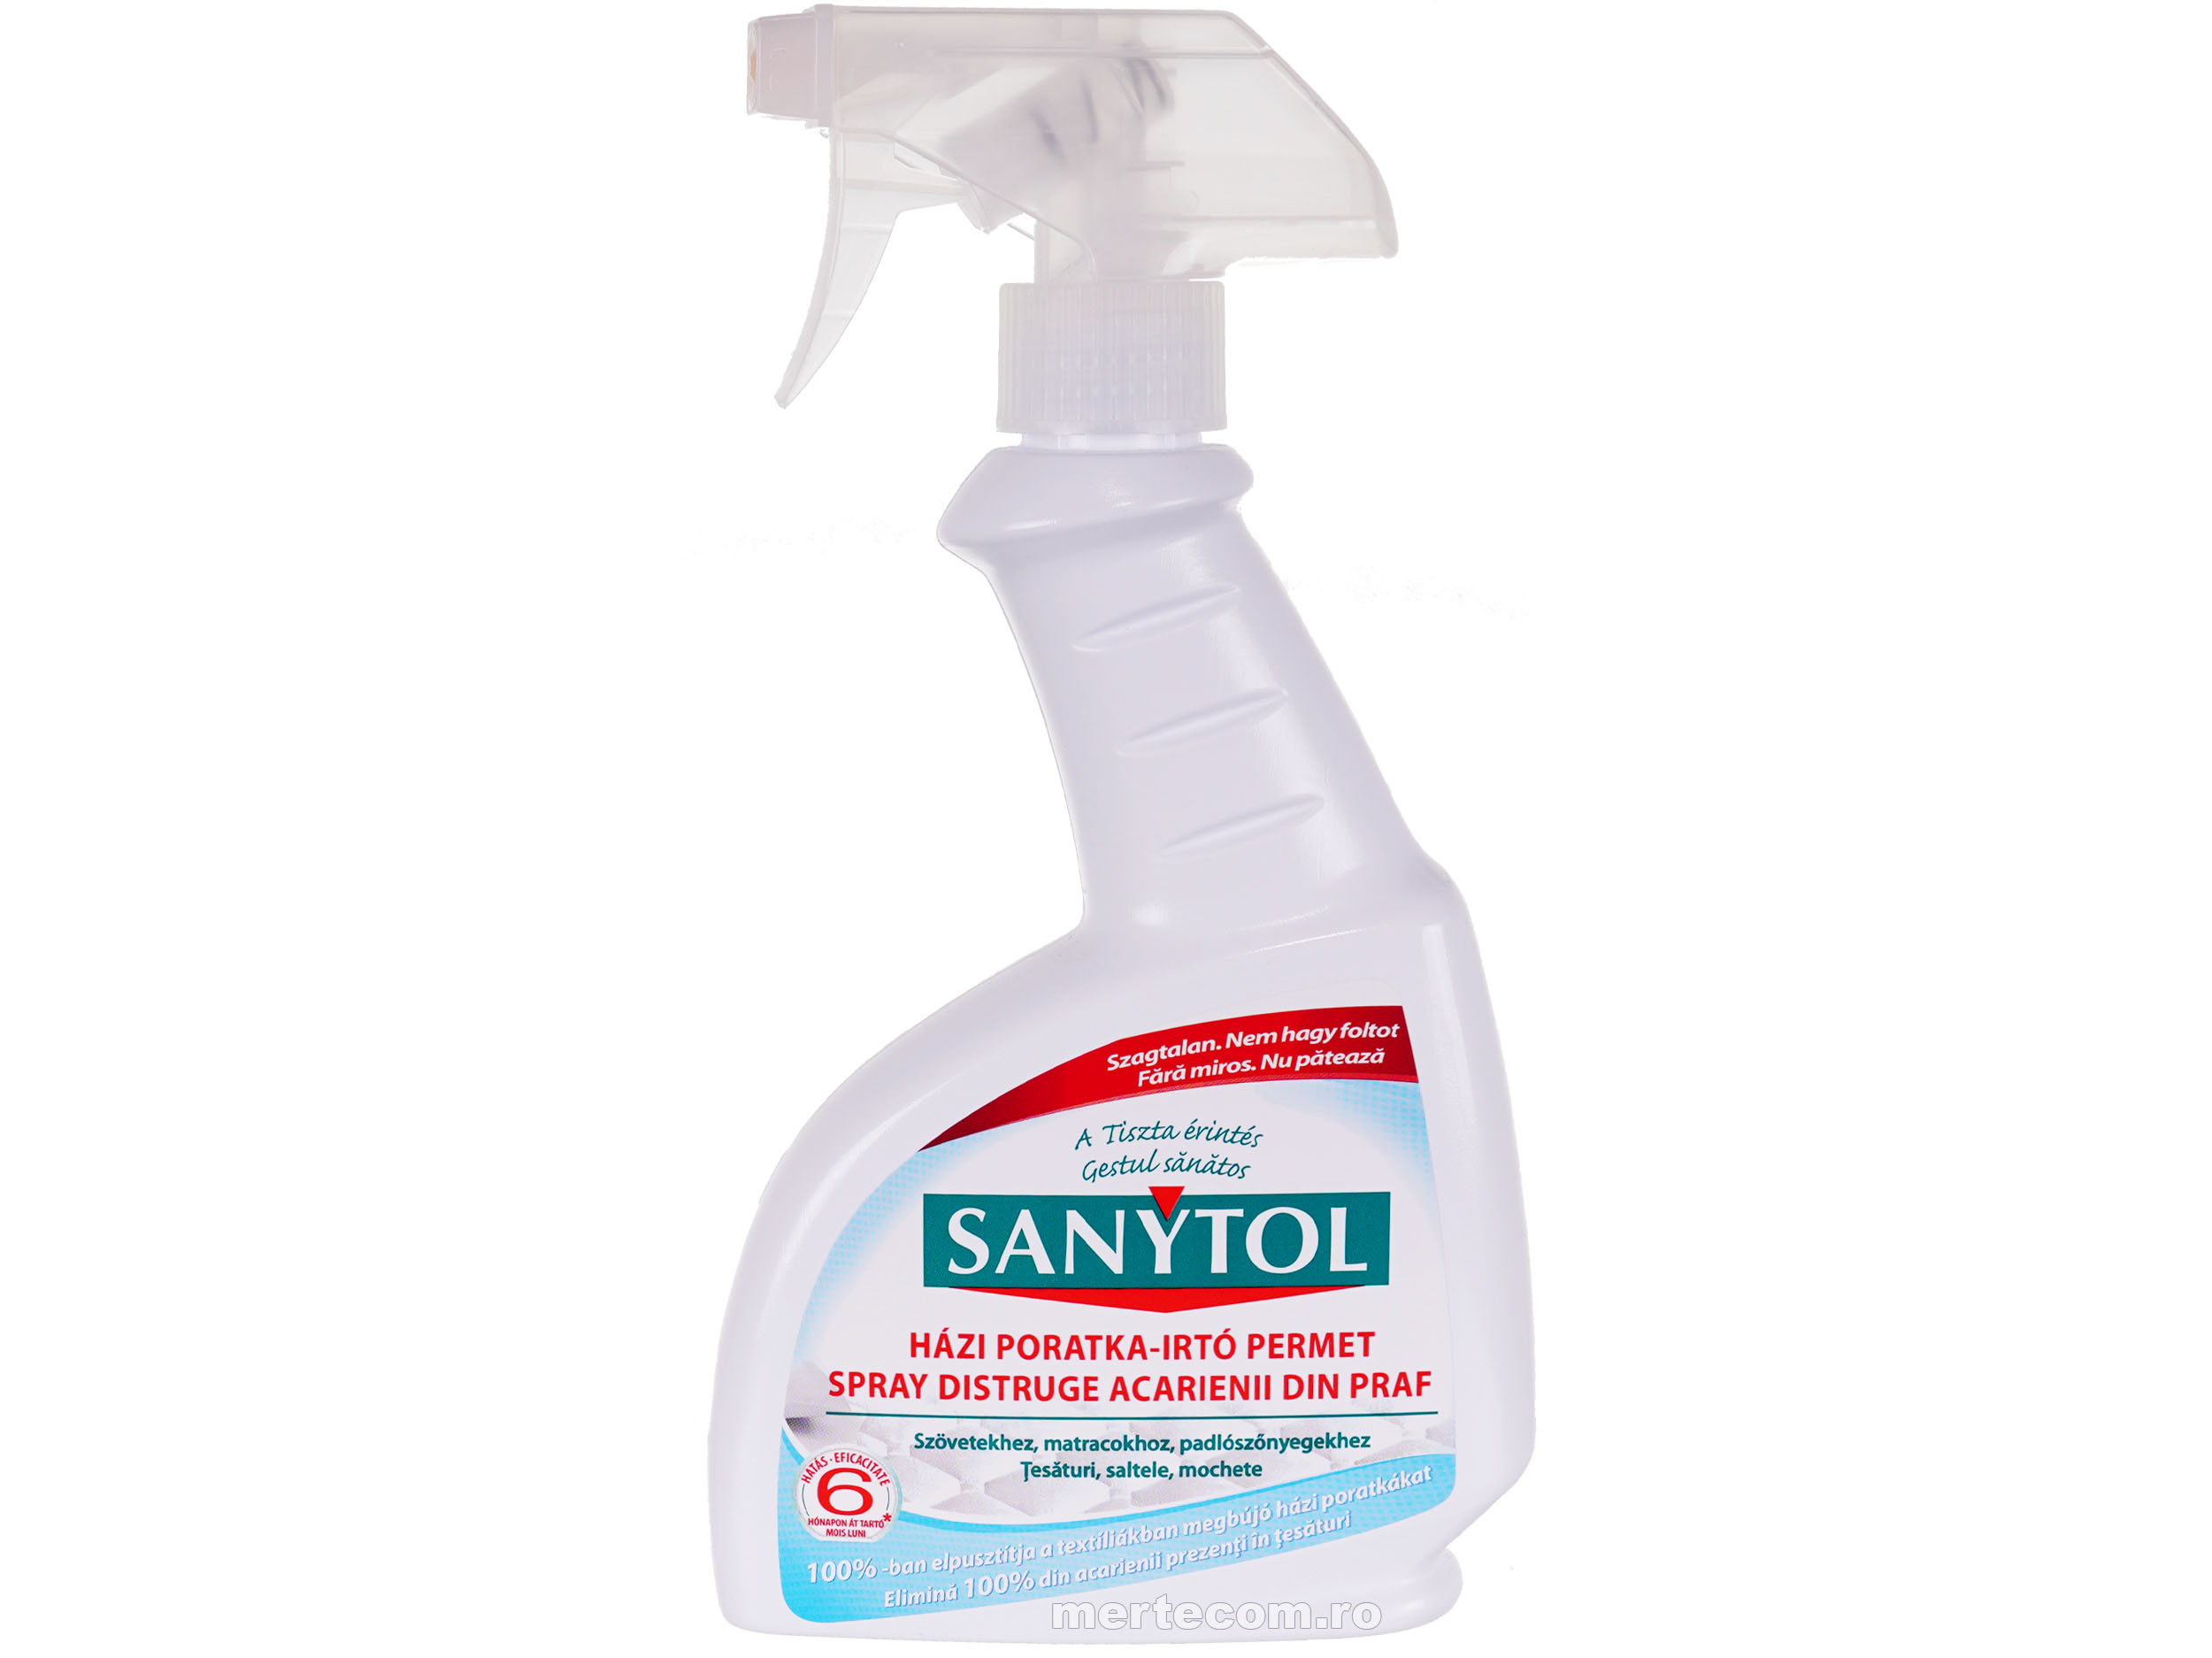 On board Arbitrage Marvel Sanytol dezinfectant spray saltele mochete 300ml - Mertecom.ro